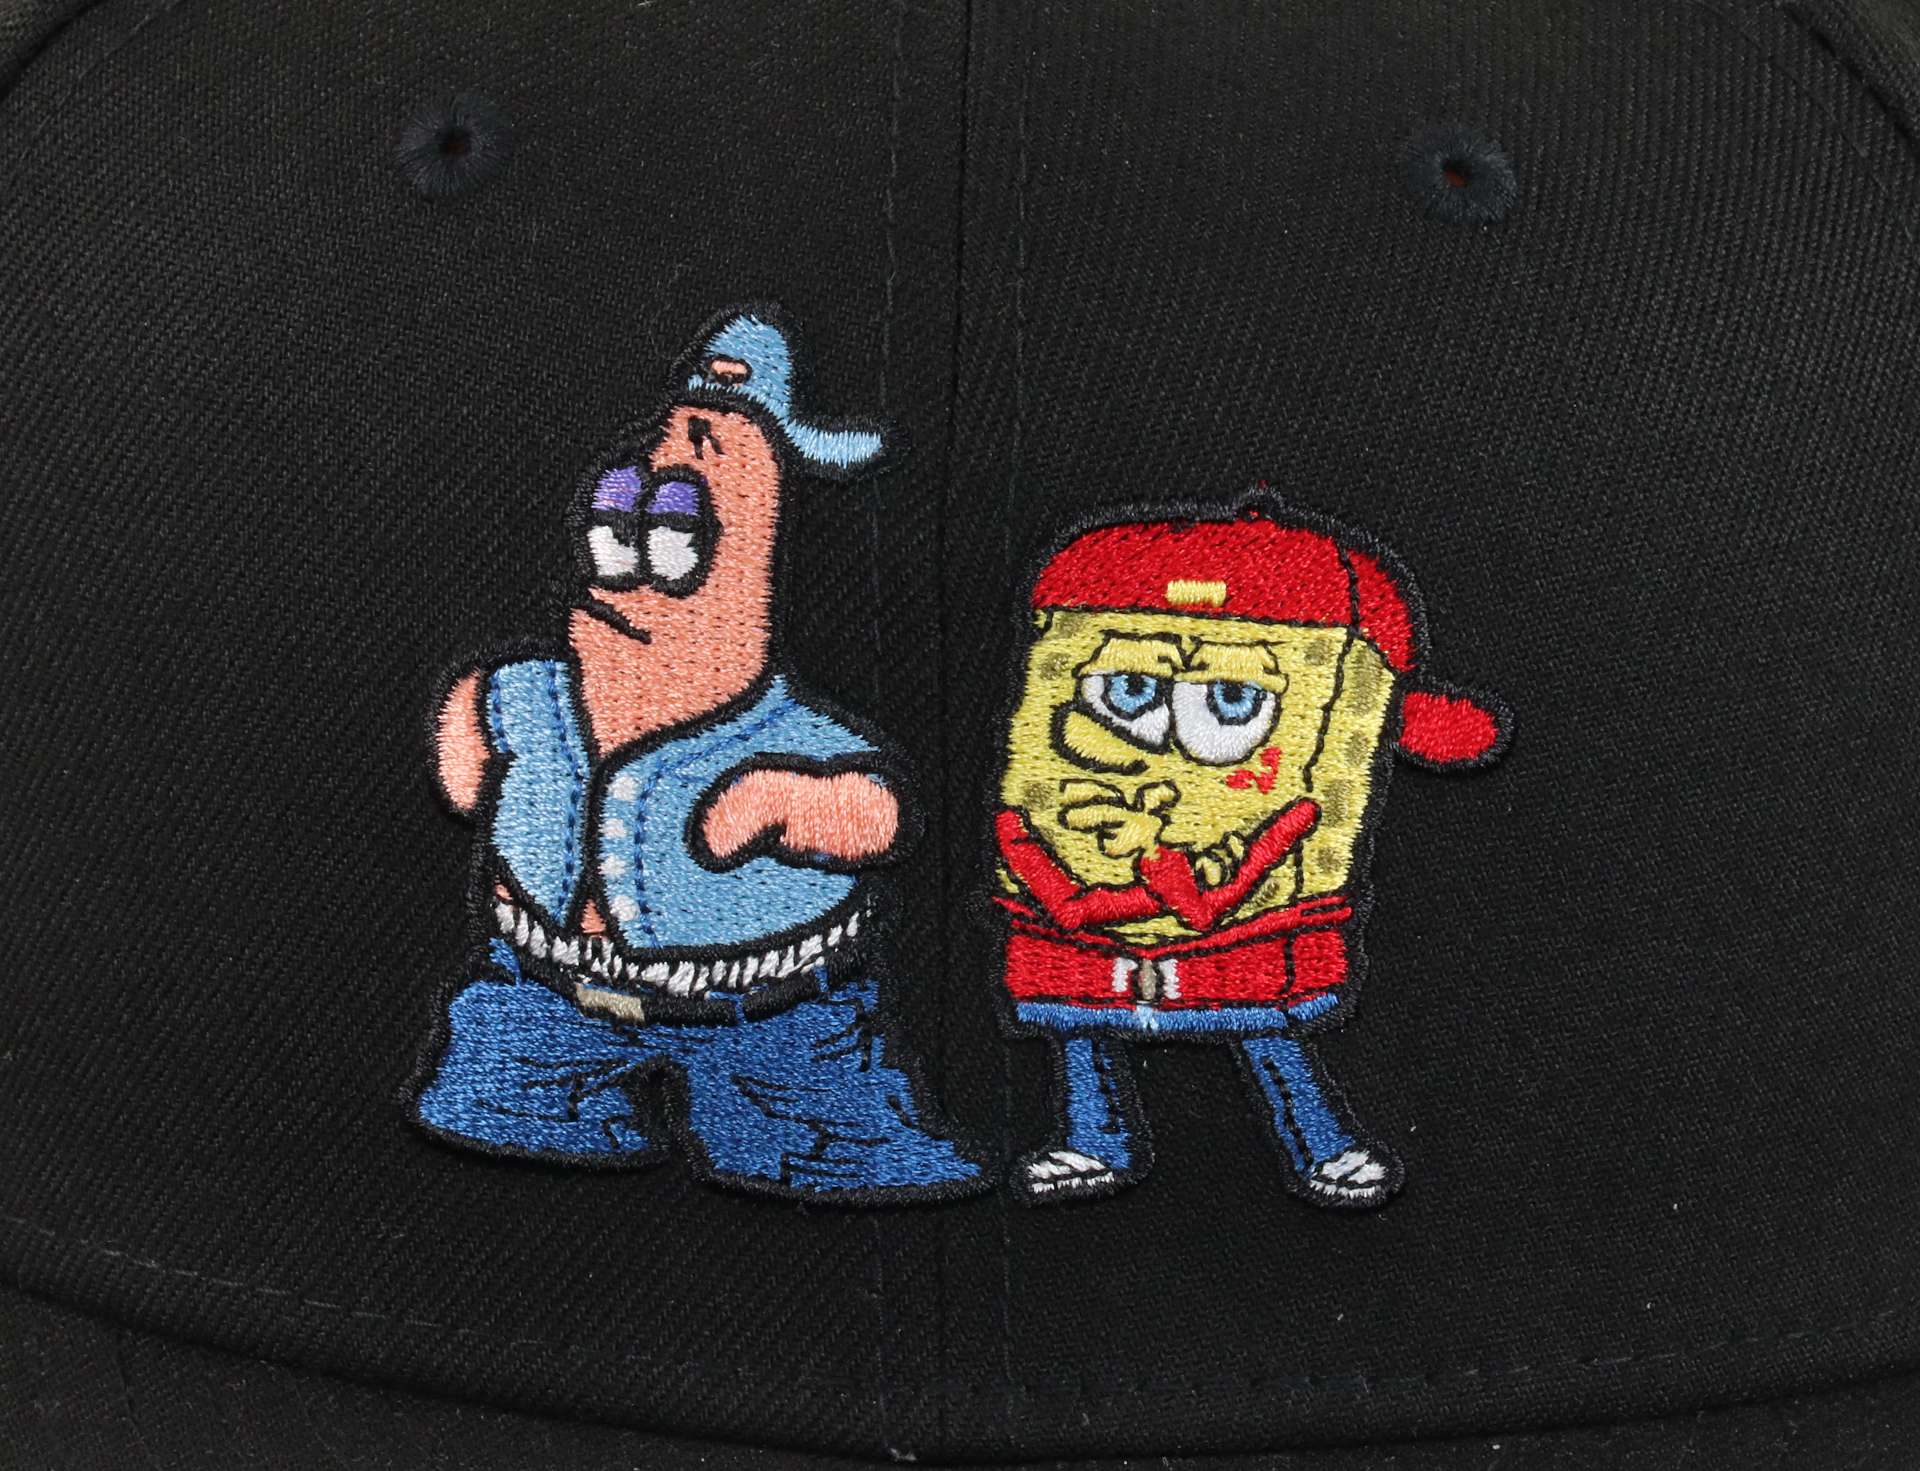 Spongebob Squarepants Spongebob & Patrick Pose Black 9Fifty Snapback Cap New Era